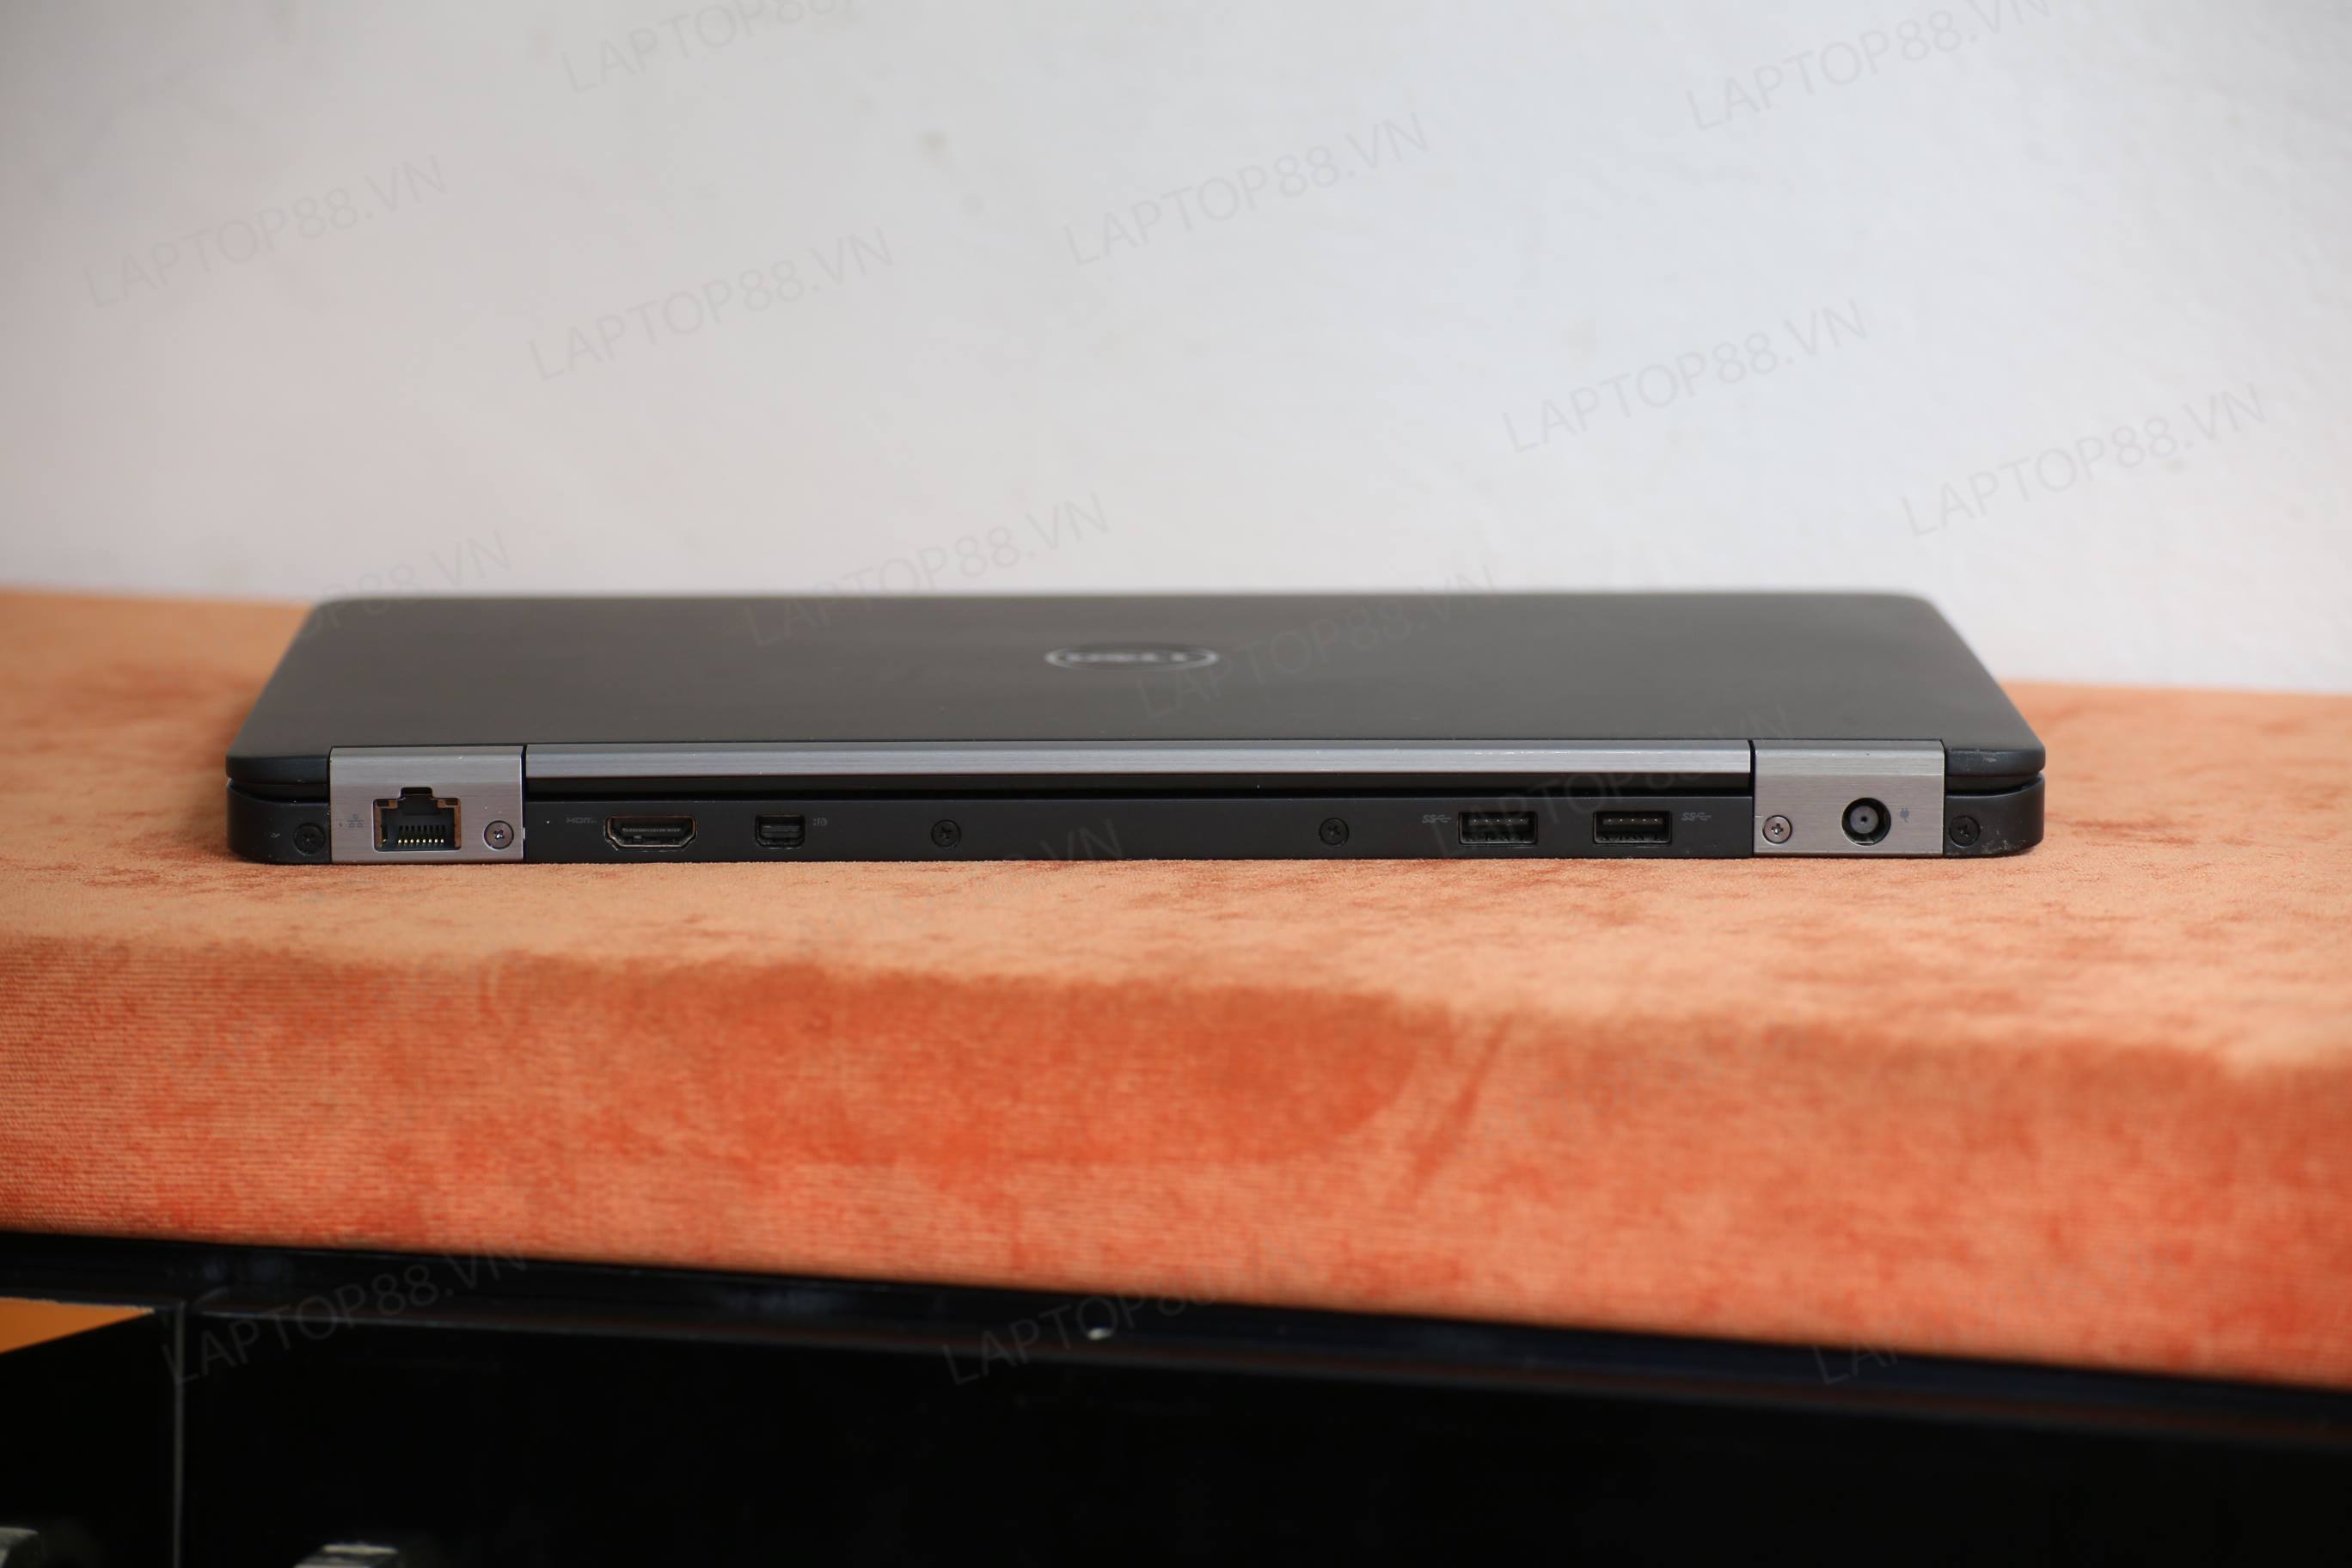 Laptop Cũ Dell Latitude E7270 - Intel Core i3 - Màn hình Full HD - Flash sale